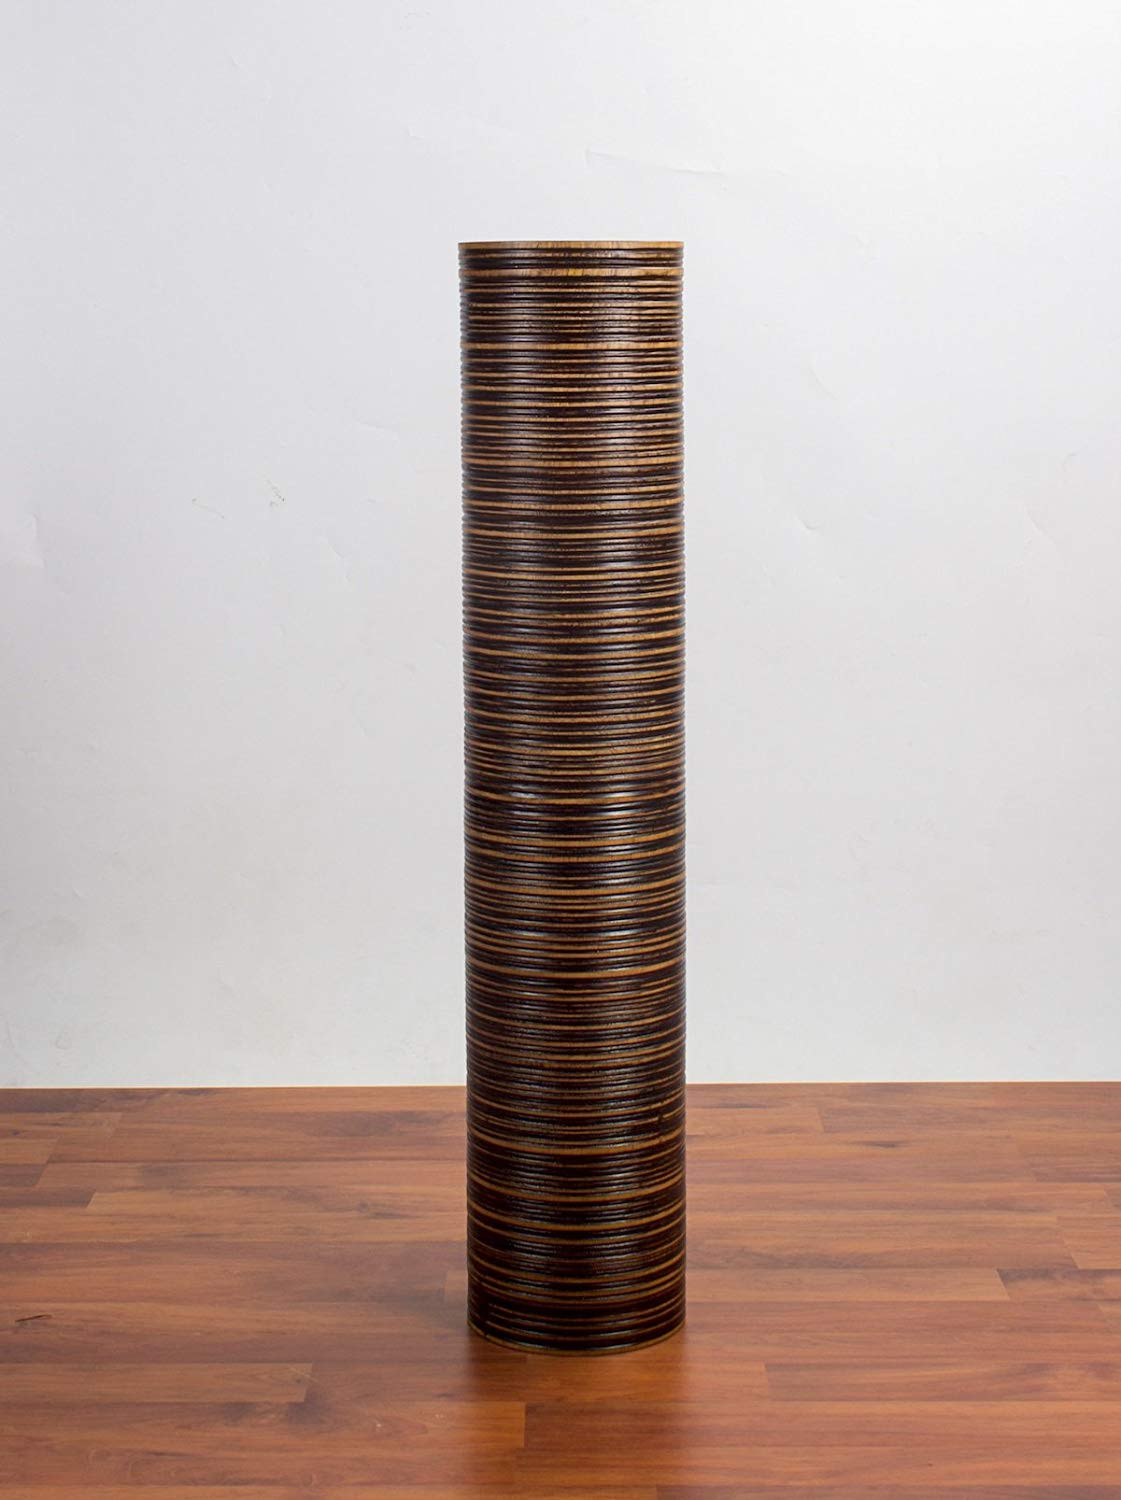 26 Wonderful Spun Bamboo Vase 2023 free download spun bamboo vase of amazon com tall floor vase 30 inches wood brown home kitchen in 71ywhr0whul sl1500